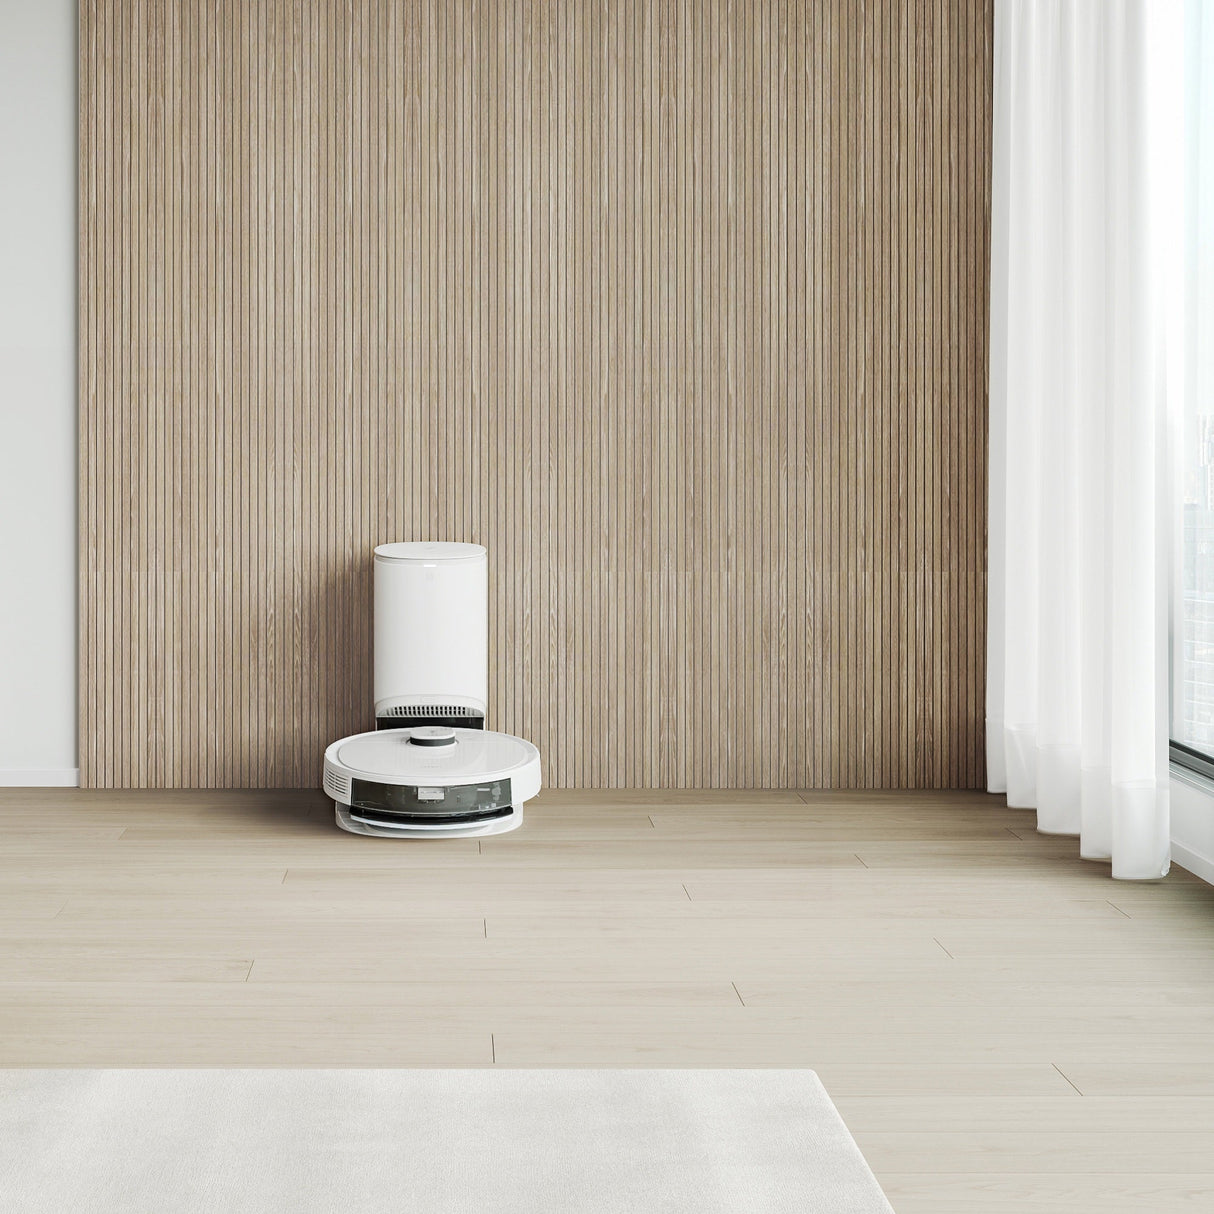 DEEBOT N8 PRO+ Robot Vacuum Cleaner - dToF LiDAR, 110min Runtime - UNBOXED DEAL